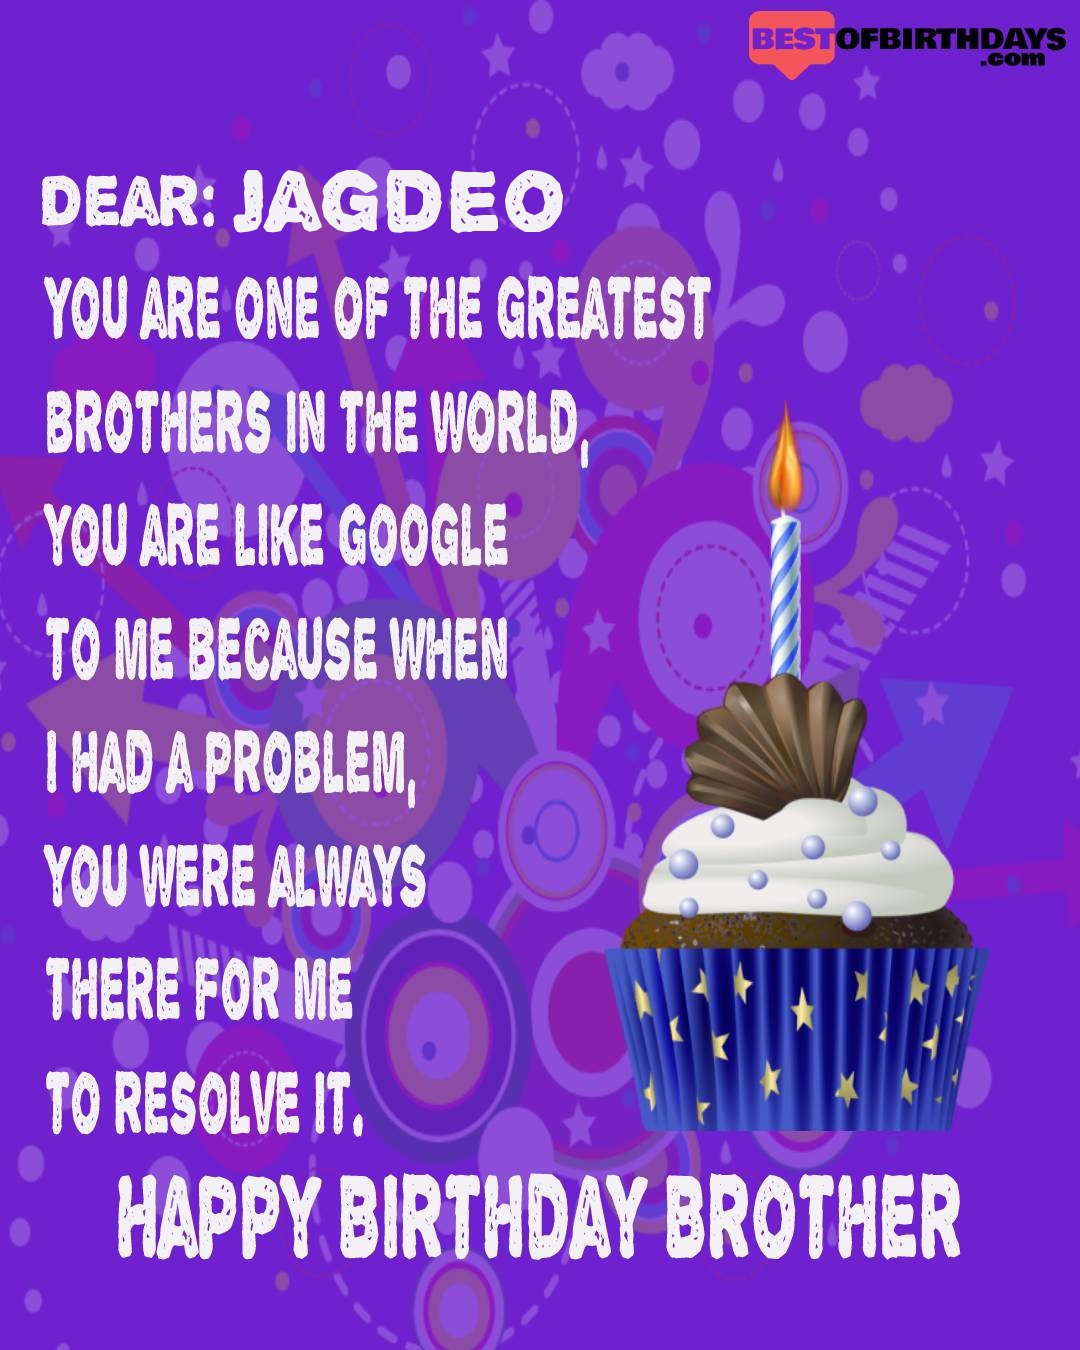 Happy birthday jagdeo bhai brother bro